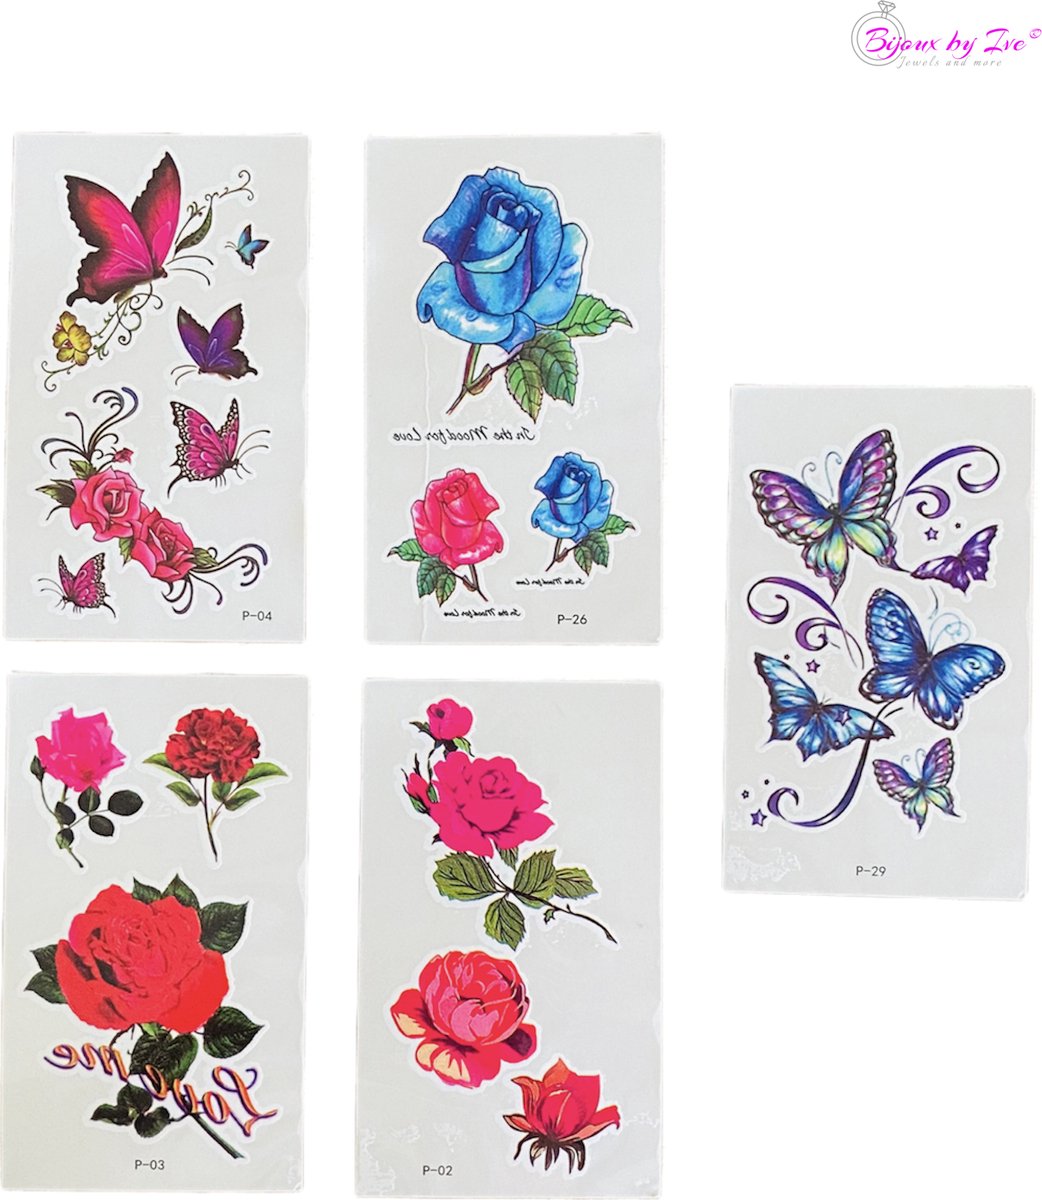 Bijoux by Ive - 5 Water overdraagbare tattoo / tatoeage velletjes - Bloemen en vlinders - Set 6